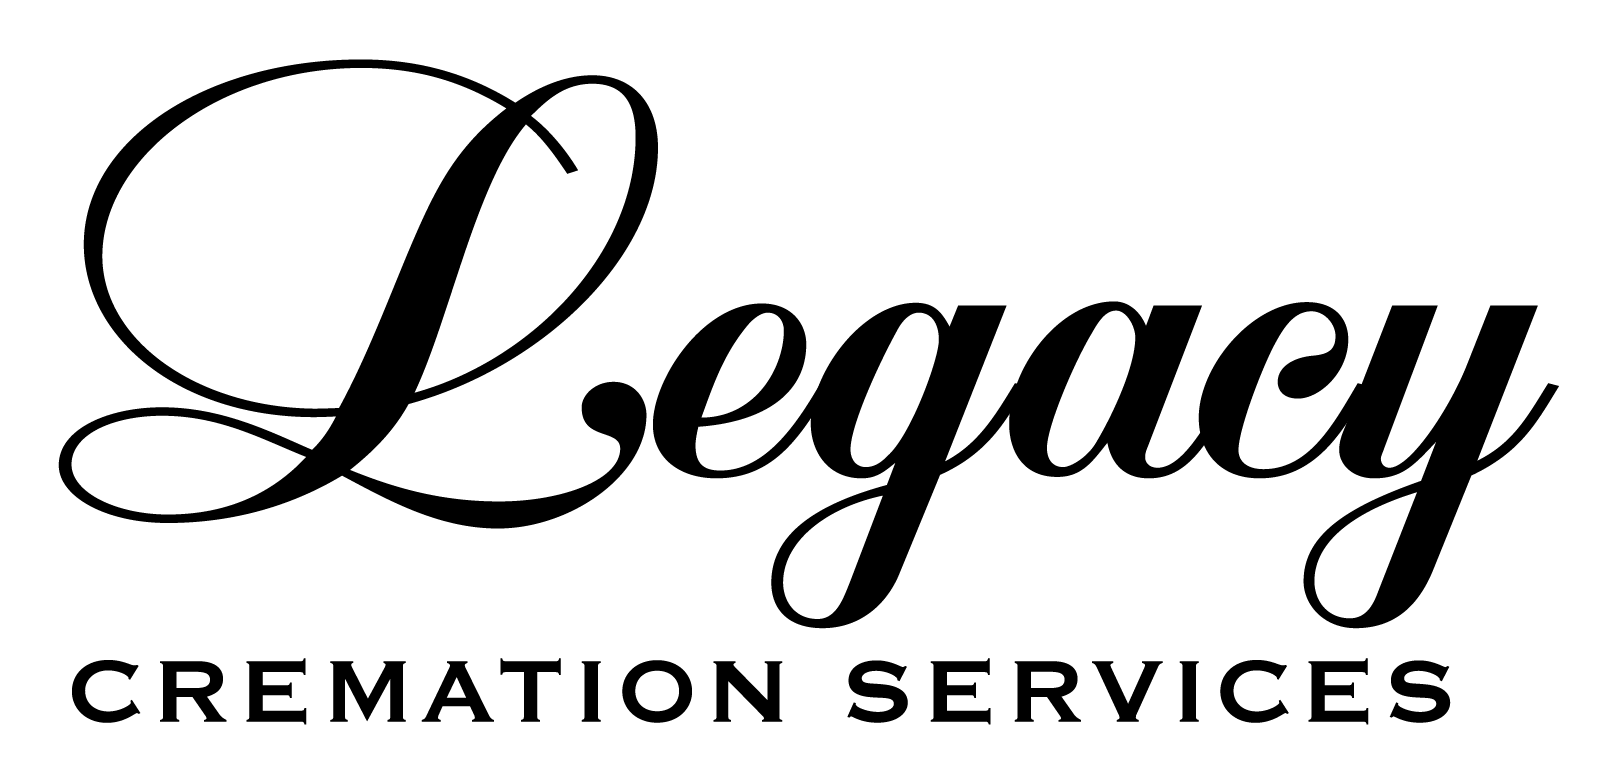 legacy cremation service logo